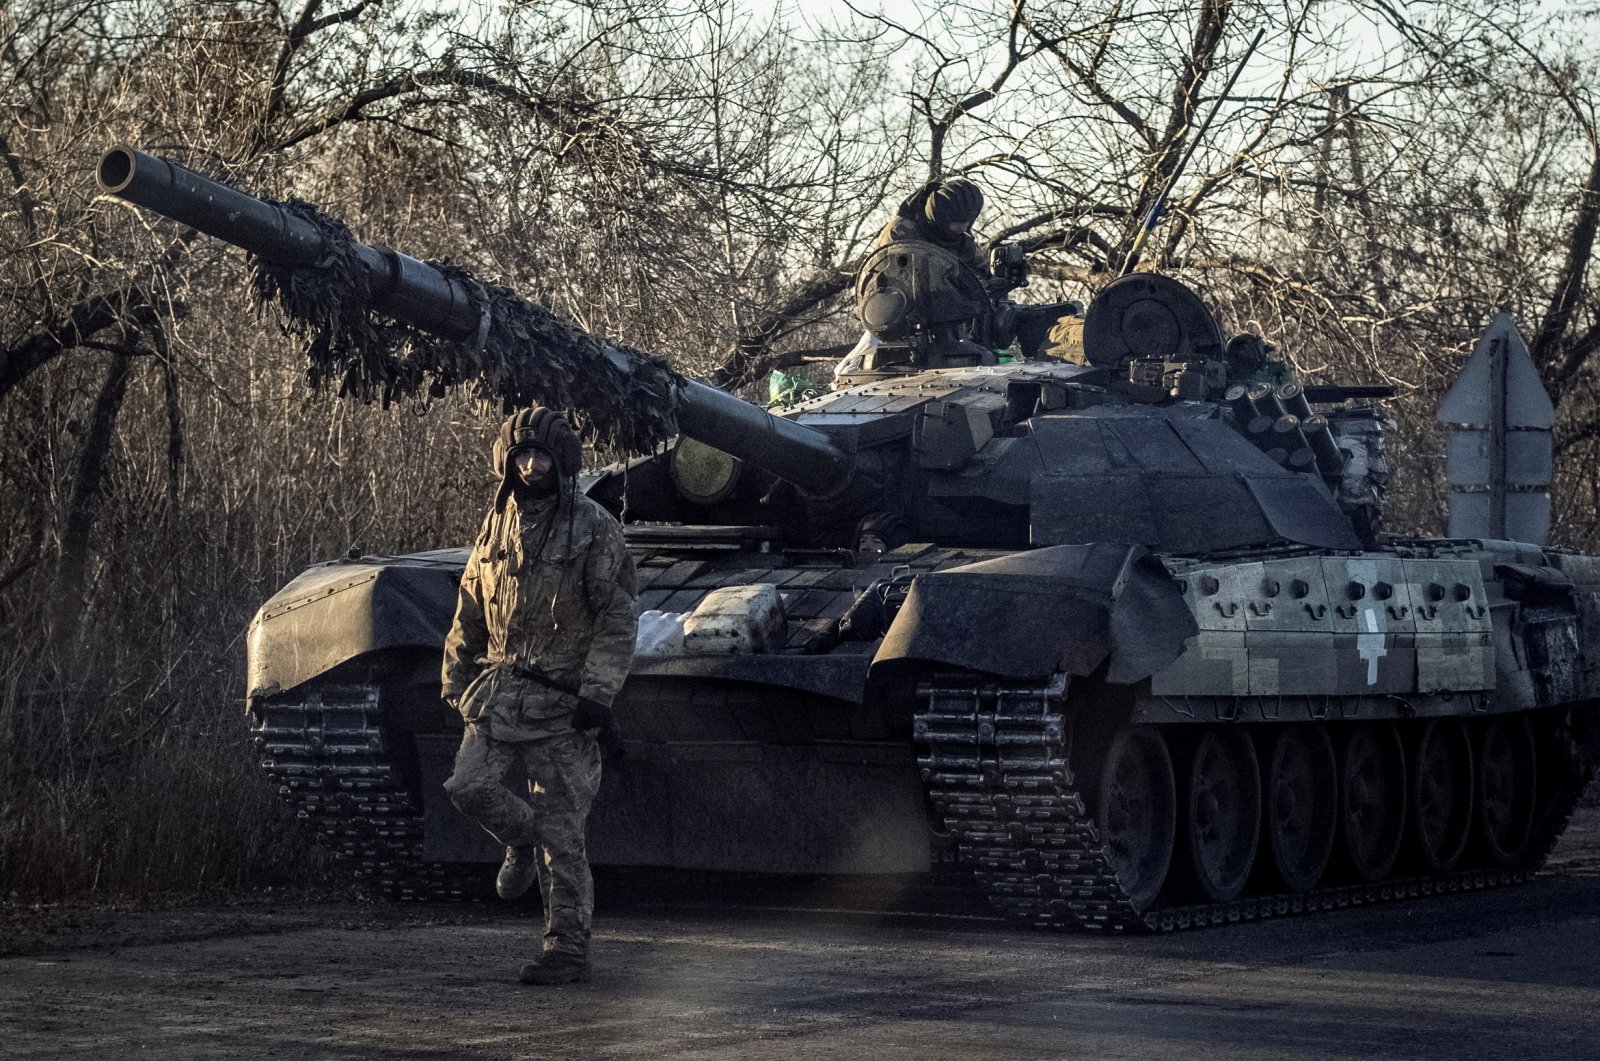 A Ukrainian officer walks near a tank in Bakhmut, as Russia&#039;s attack on Ukraine continues, Donetsk region, Ukraine, Dec. 5, 2022. (Reuters Photo)